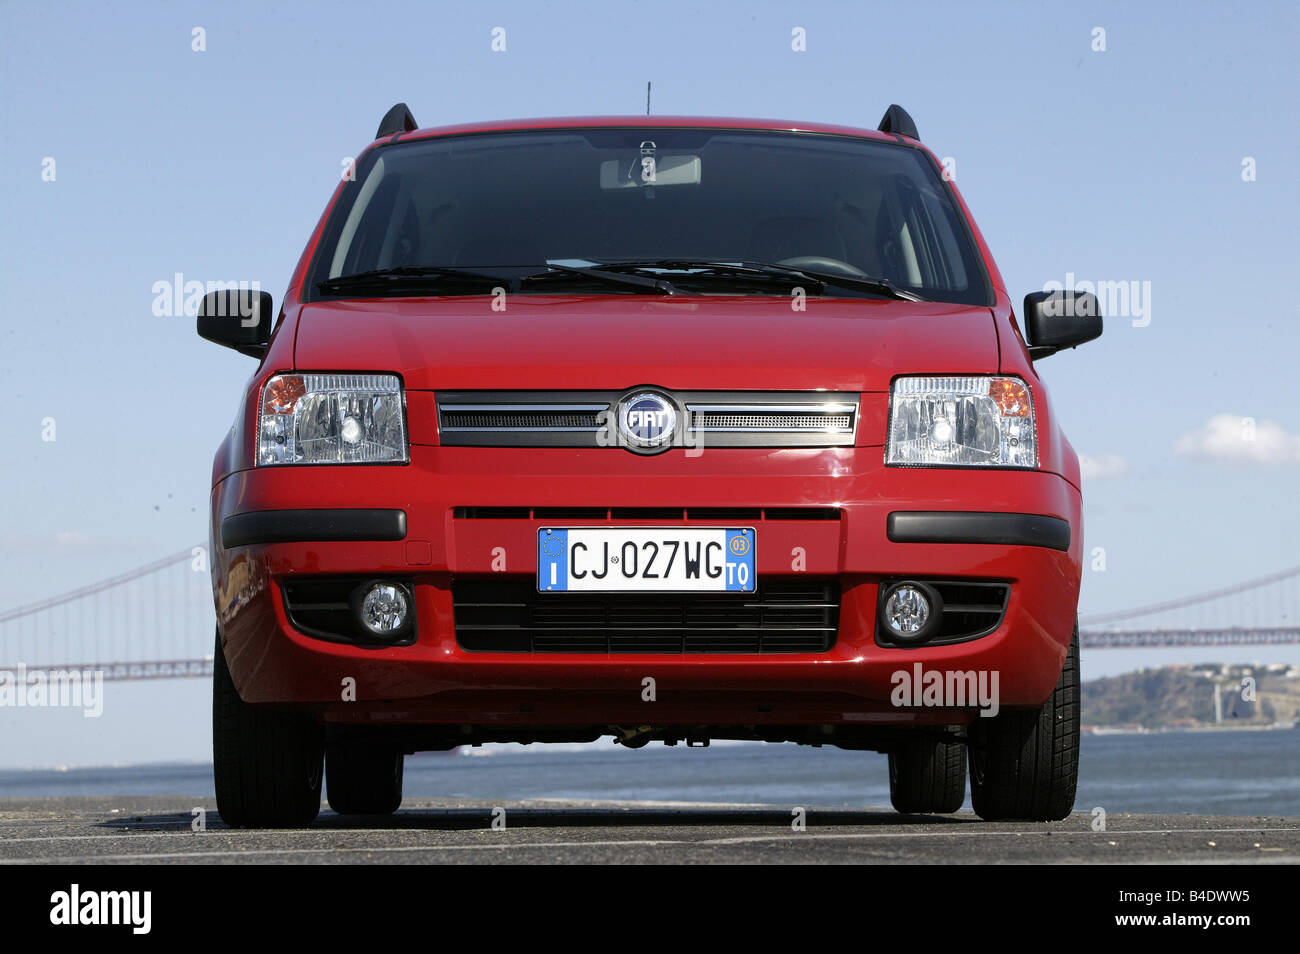 Auto, Fiat Panda, Miniapprox.s, Limousine, Modell Jahr 2003-, rot